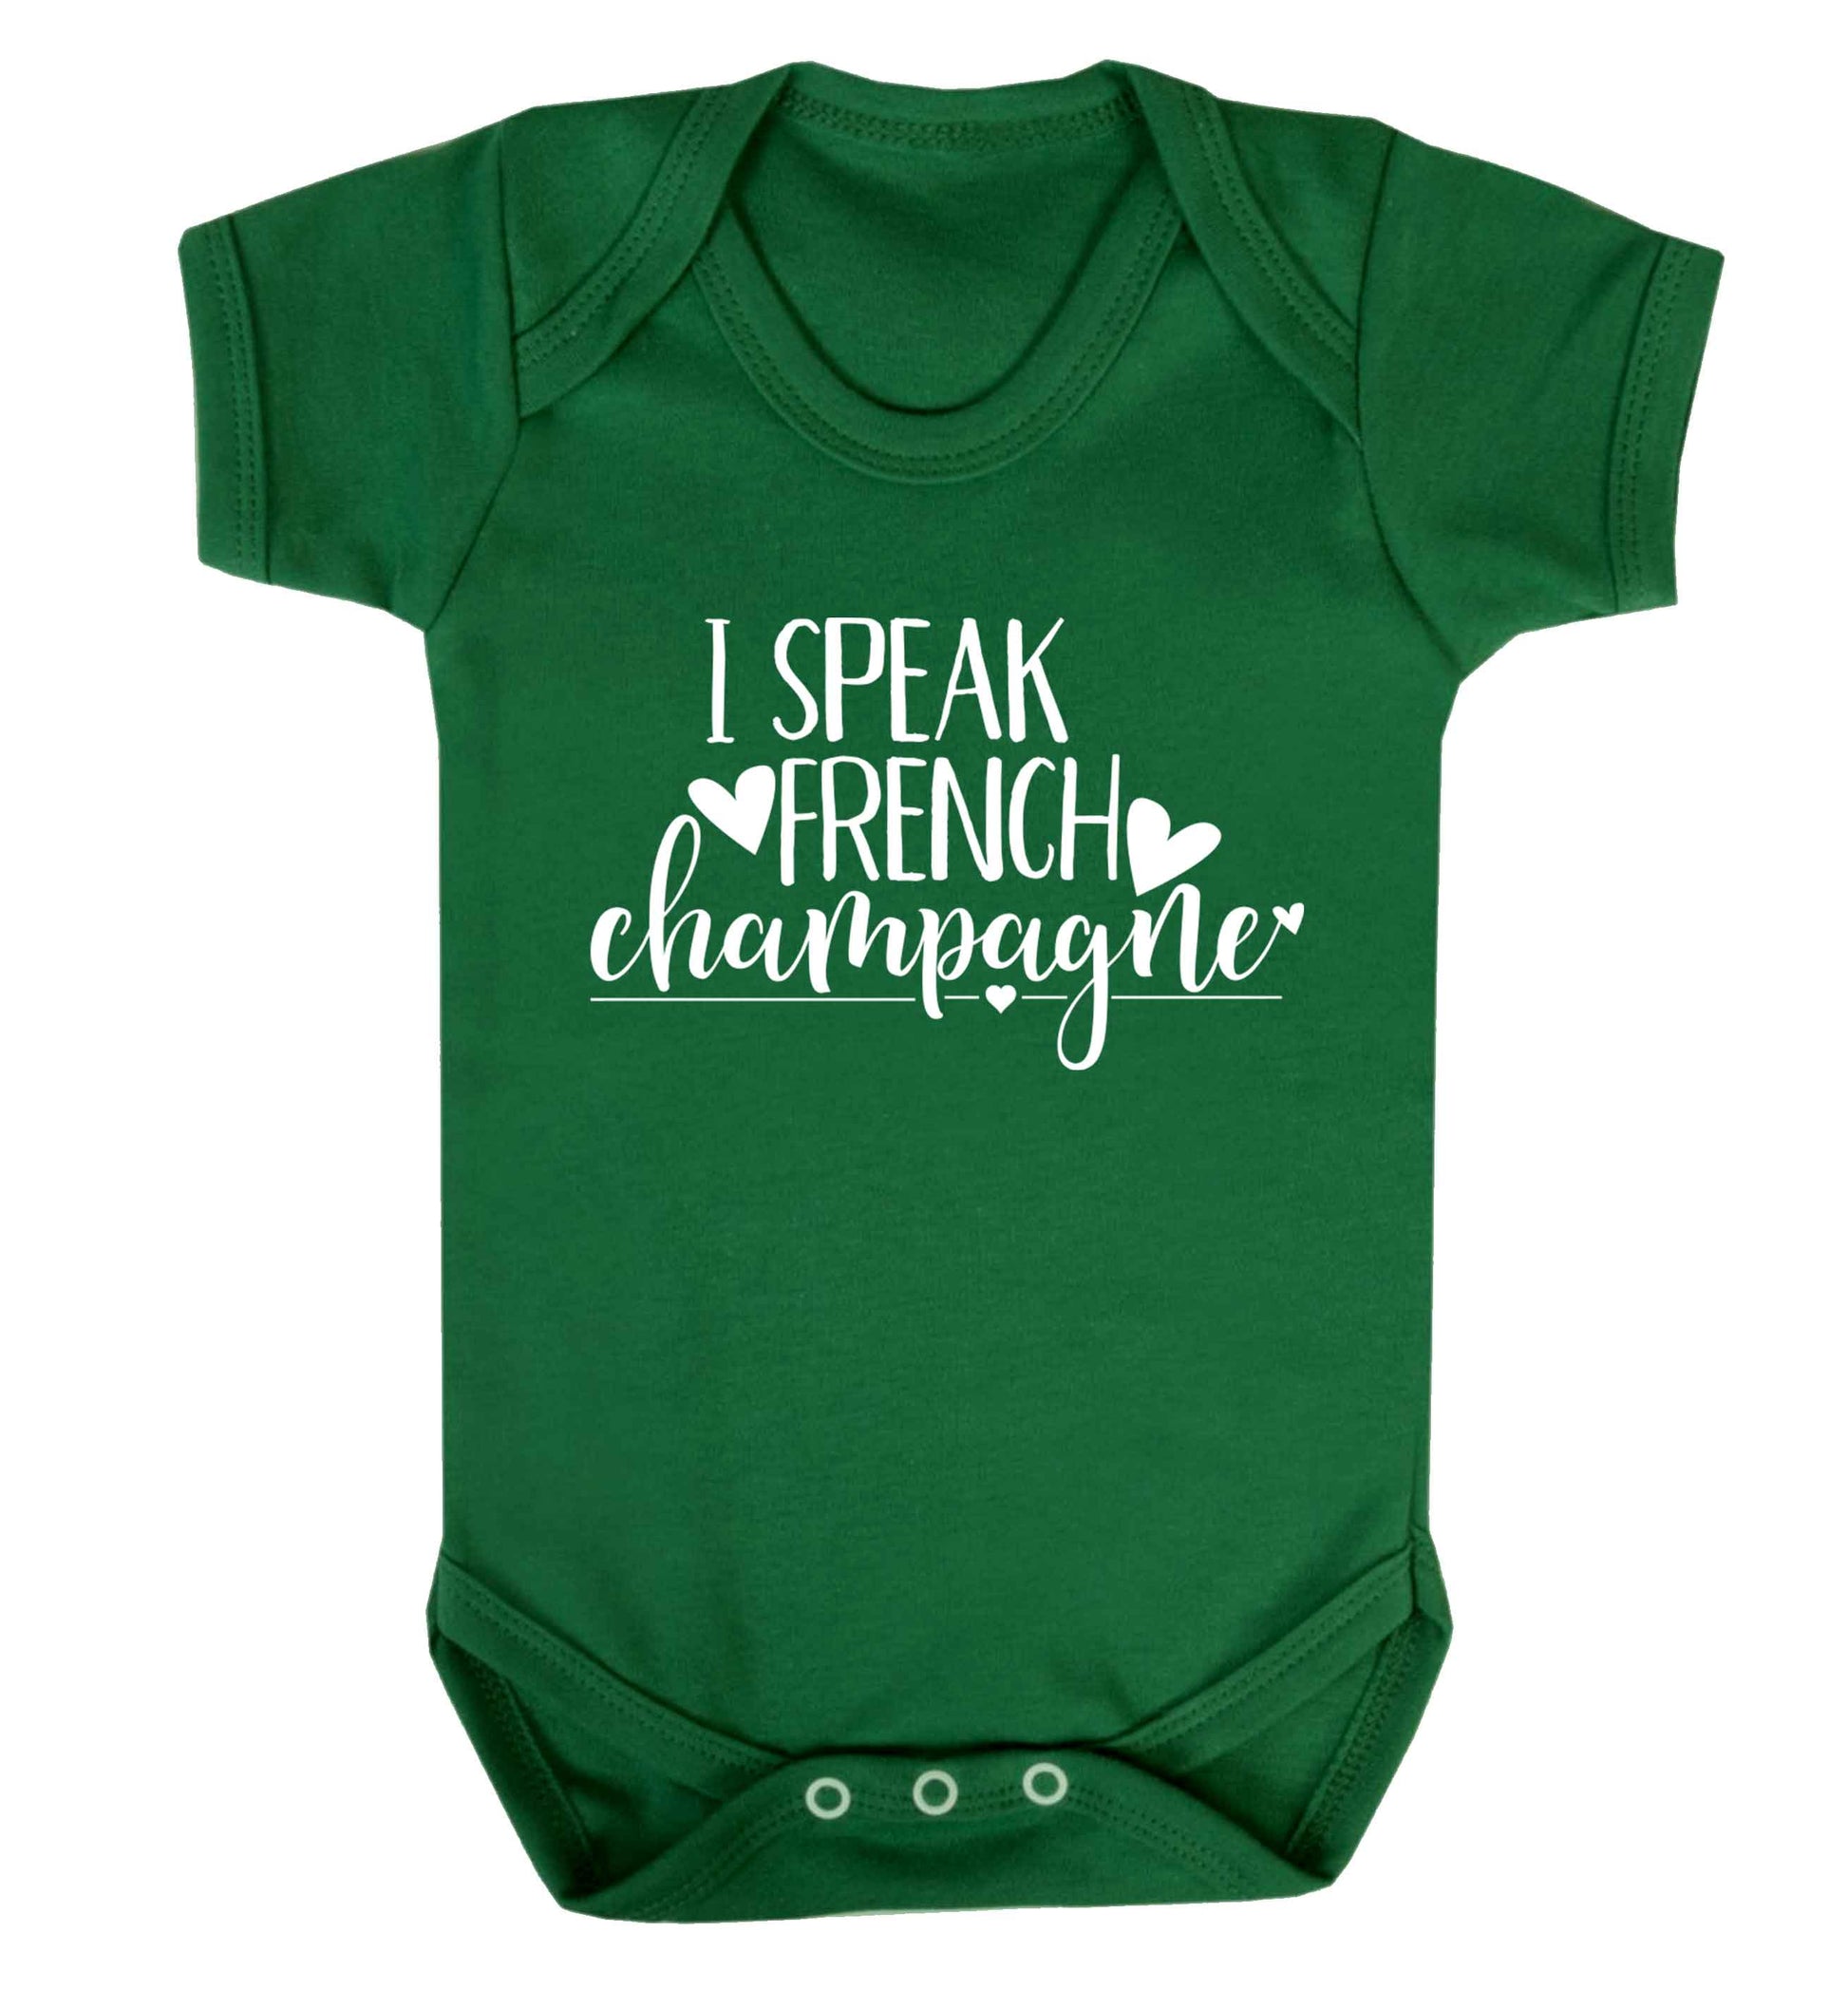 I speak french champagne Baby Vest green 18-24 months